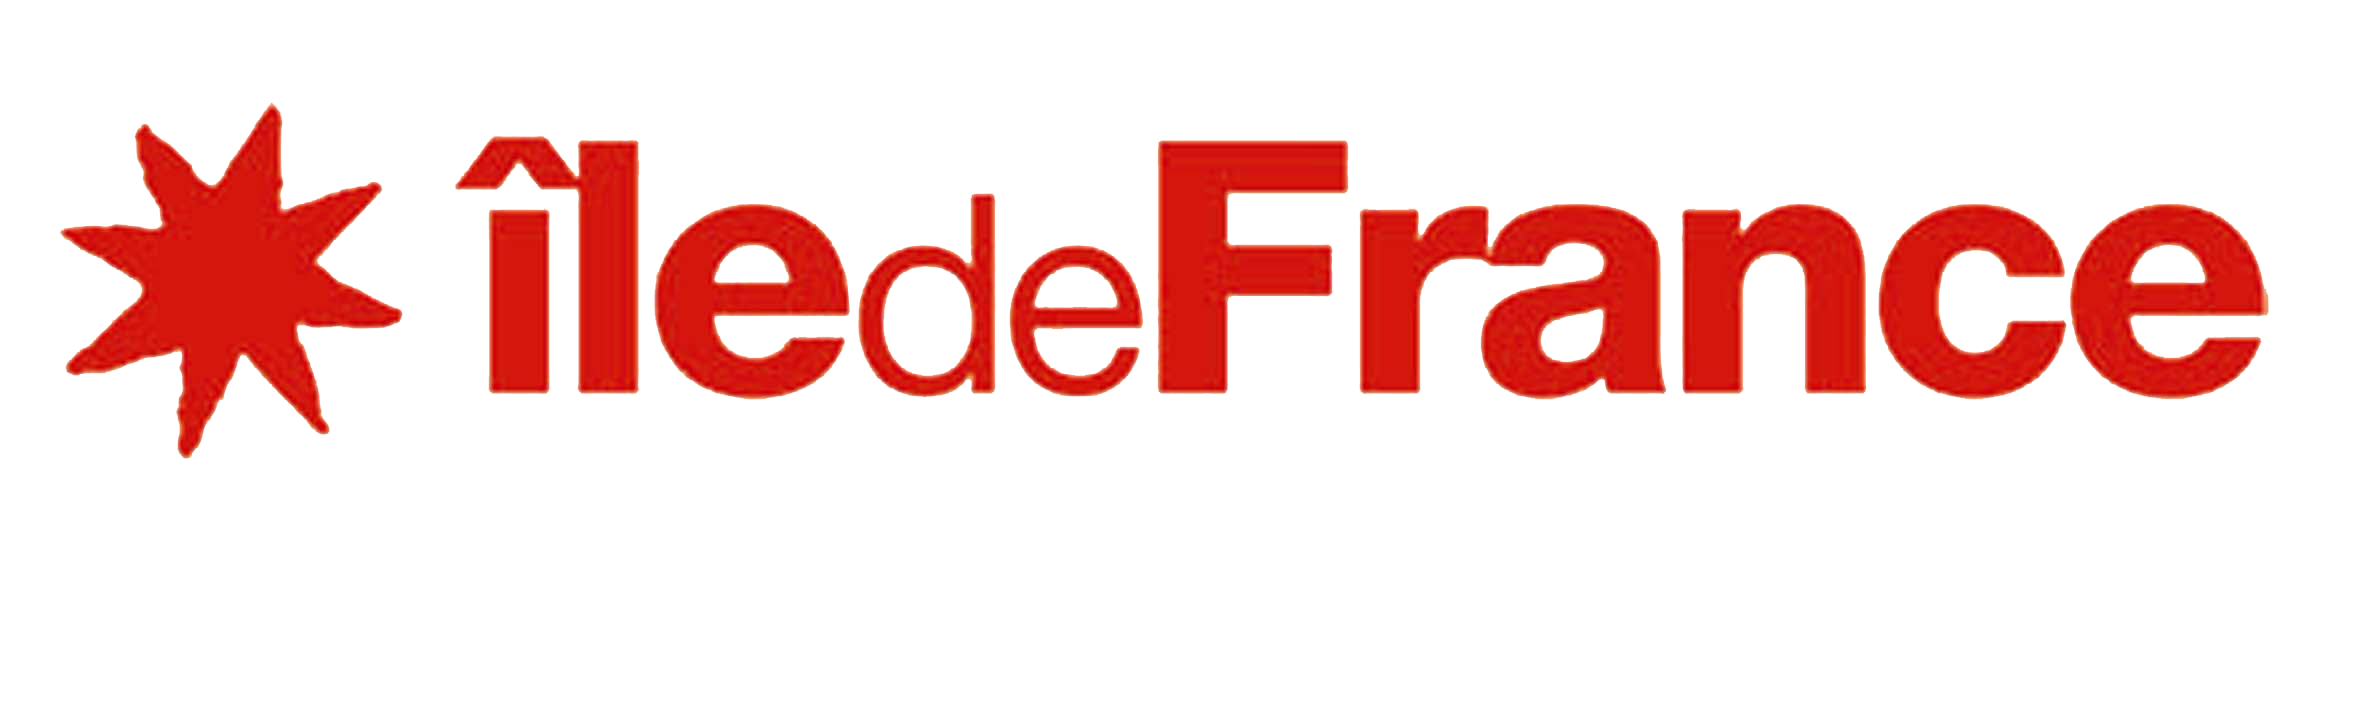 logo_ile_de_france_copie